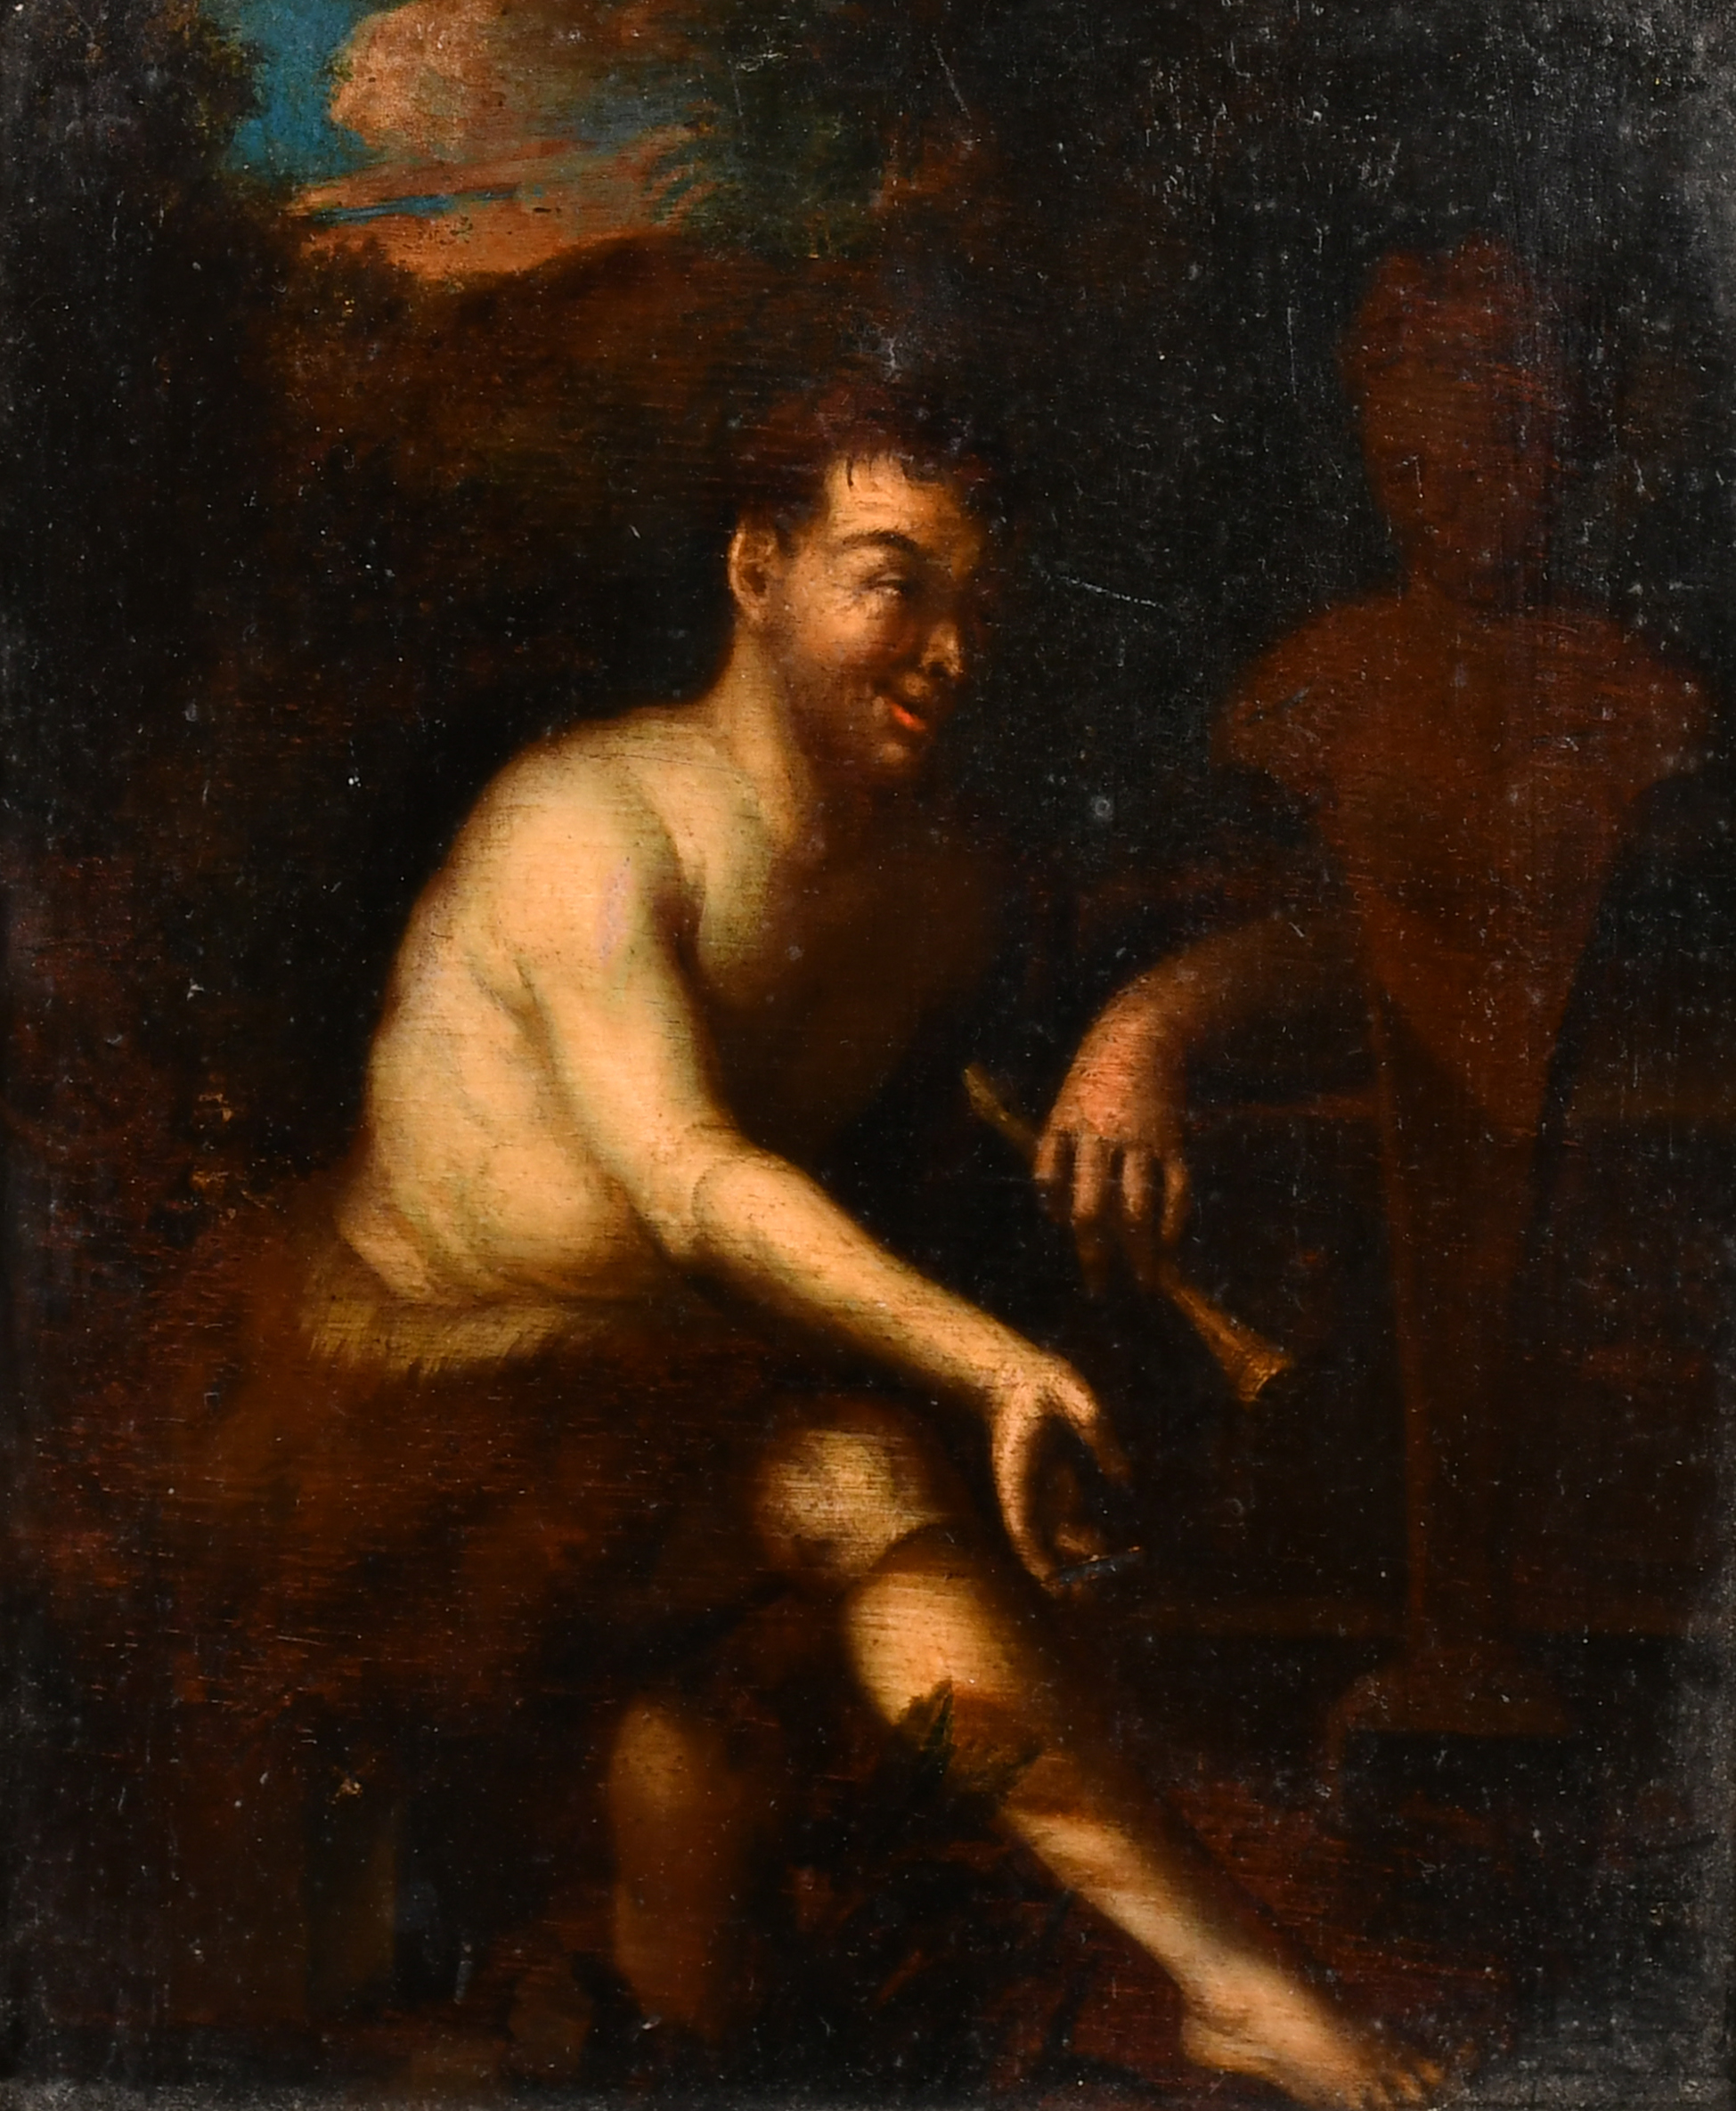 18th Century Dutch School. A Figure with a Flute, Oil on panel, 9.5" x 8" (24.1 x 20.3cm)